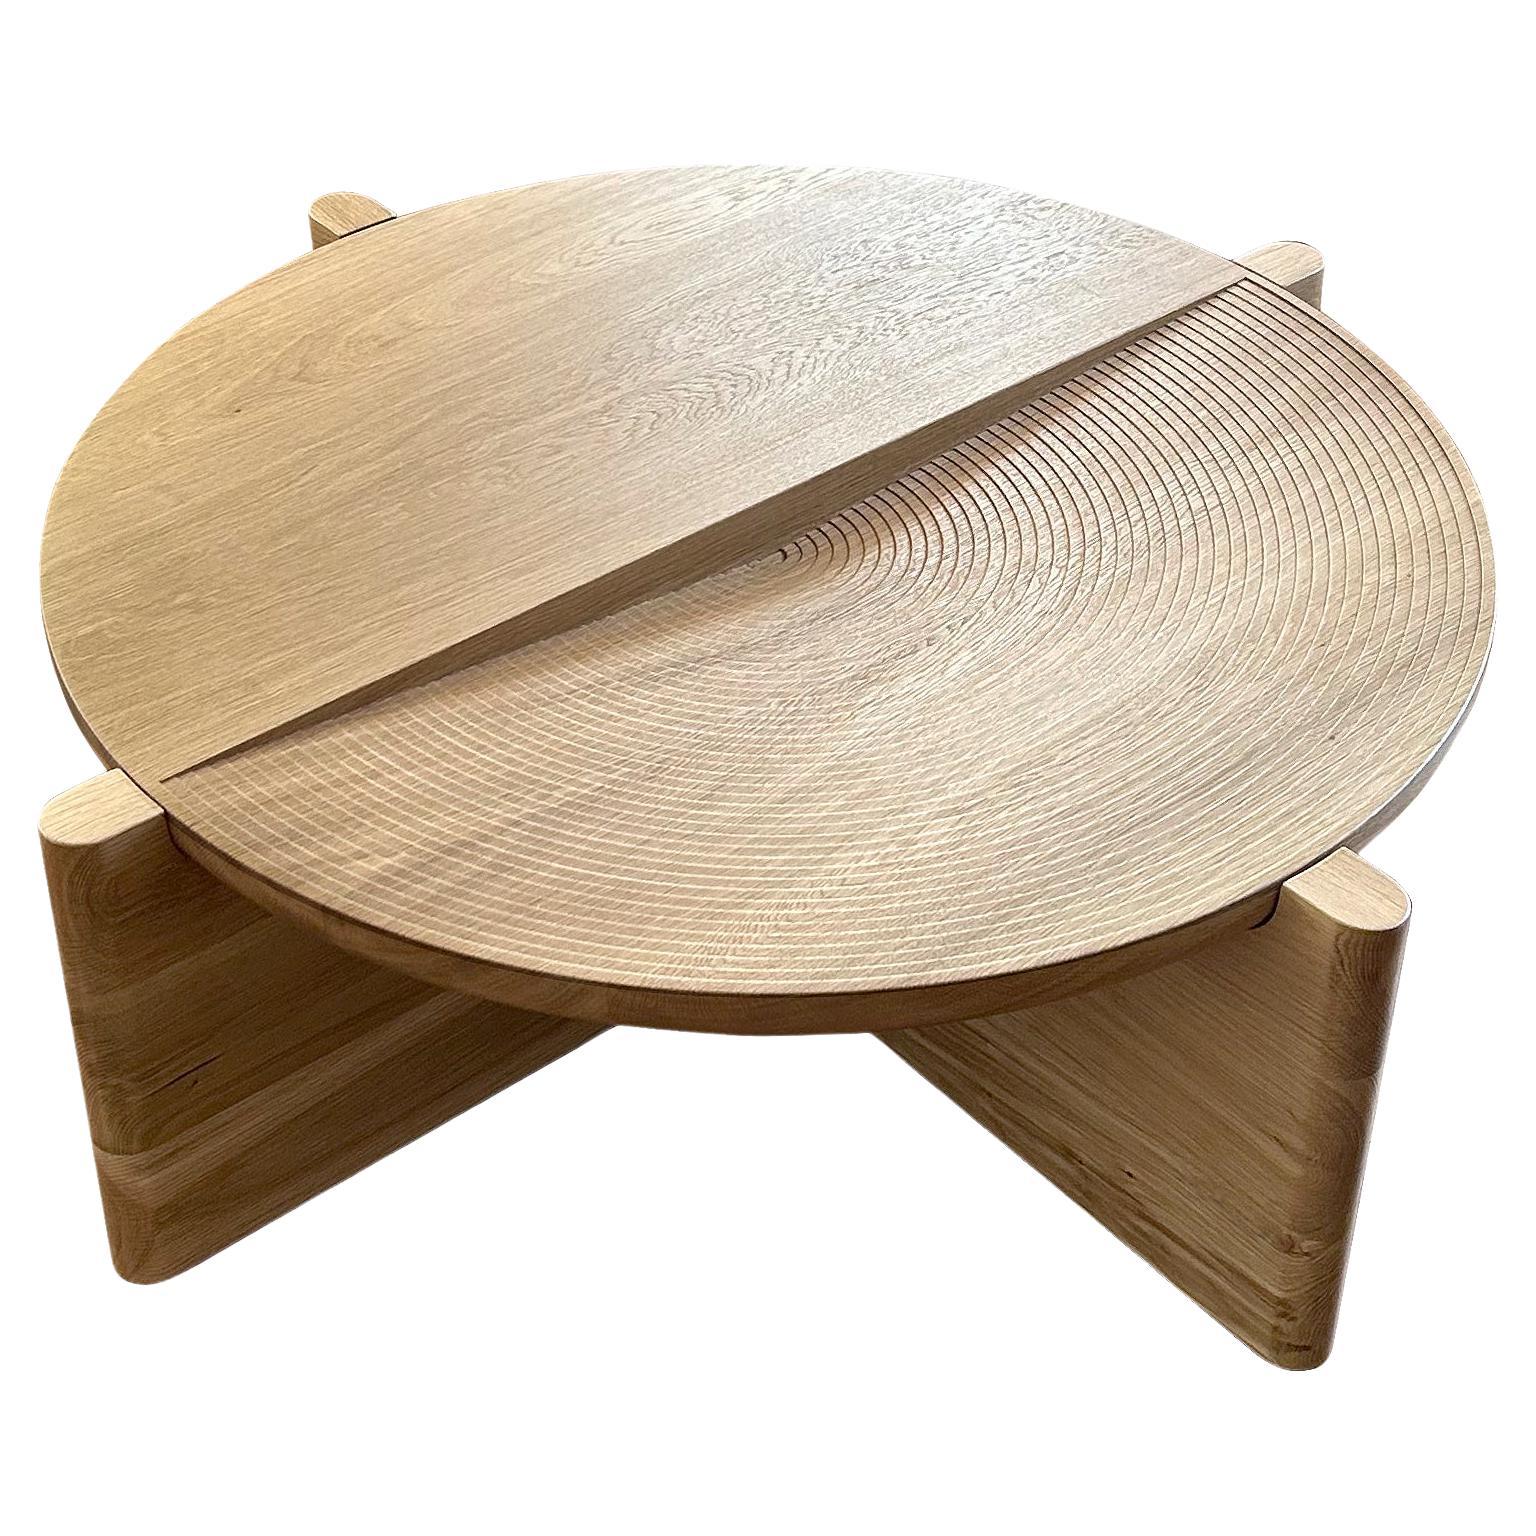 Arkhe Coffee Table in Solid Oak, Modern Sculptural Round by Fulden Topaloglu For Sale